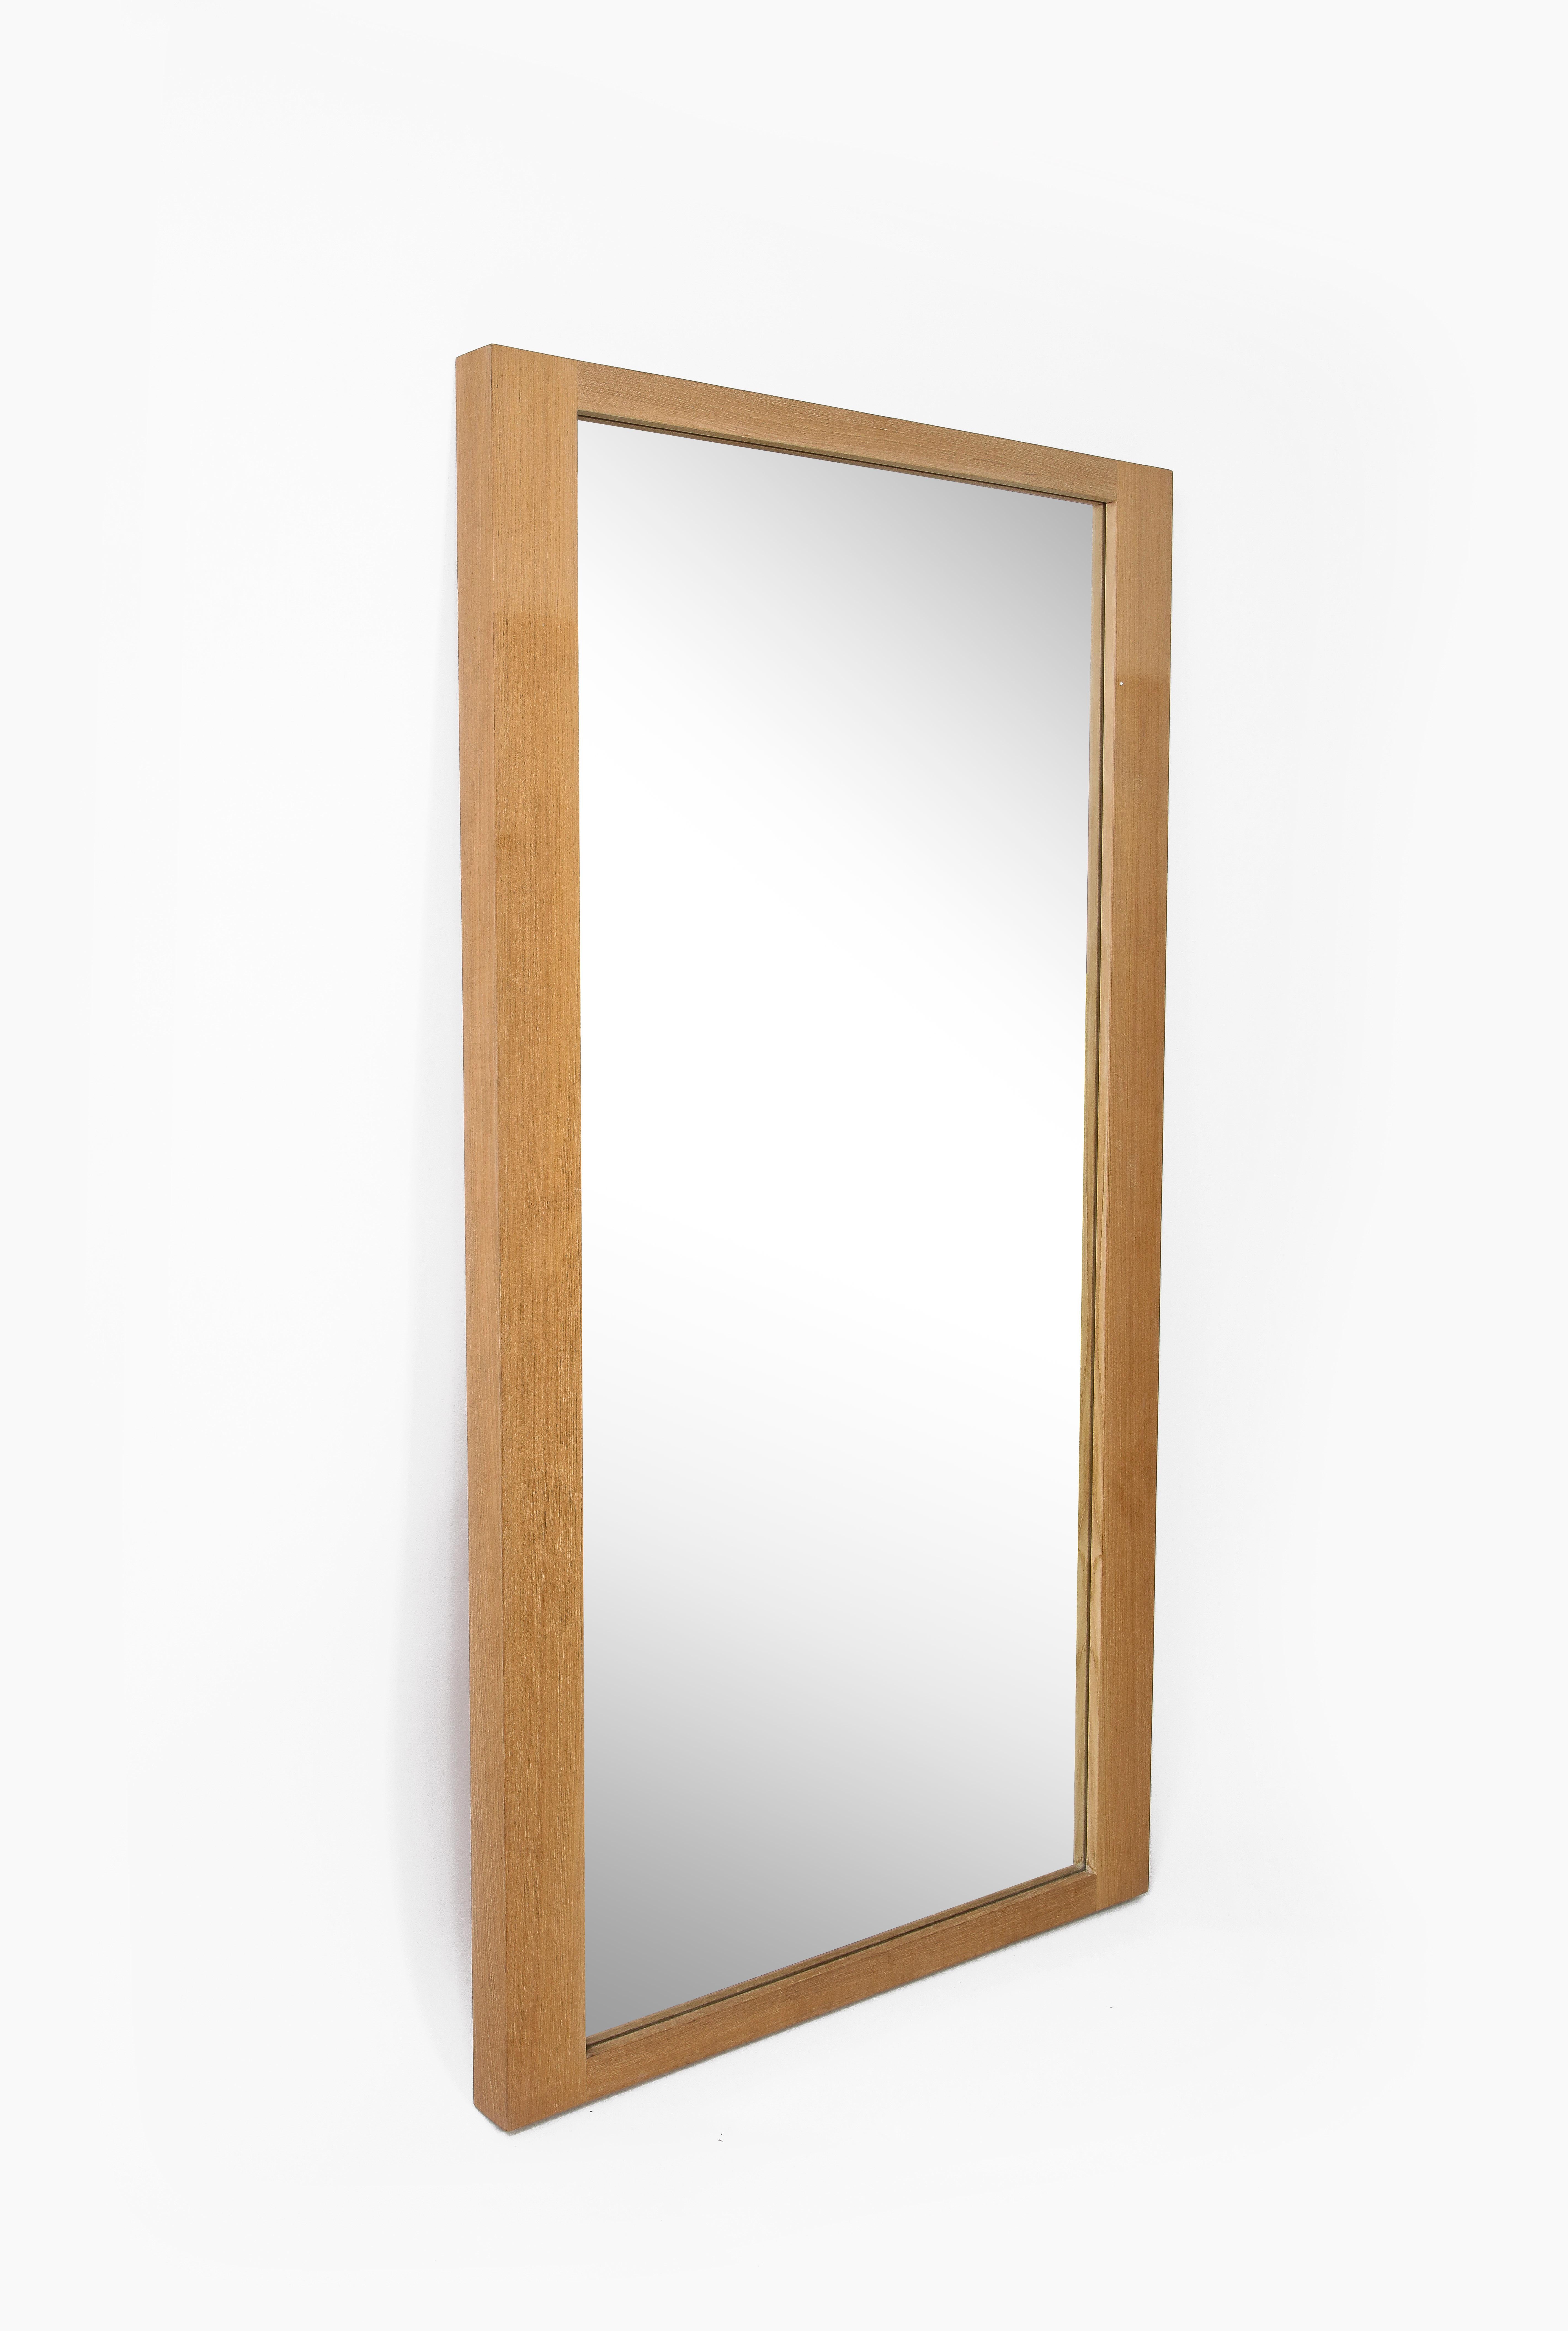 Modern Large MEIER/FERRER Schematic Mirror in Solid Teak For Sale